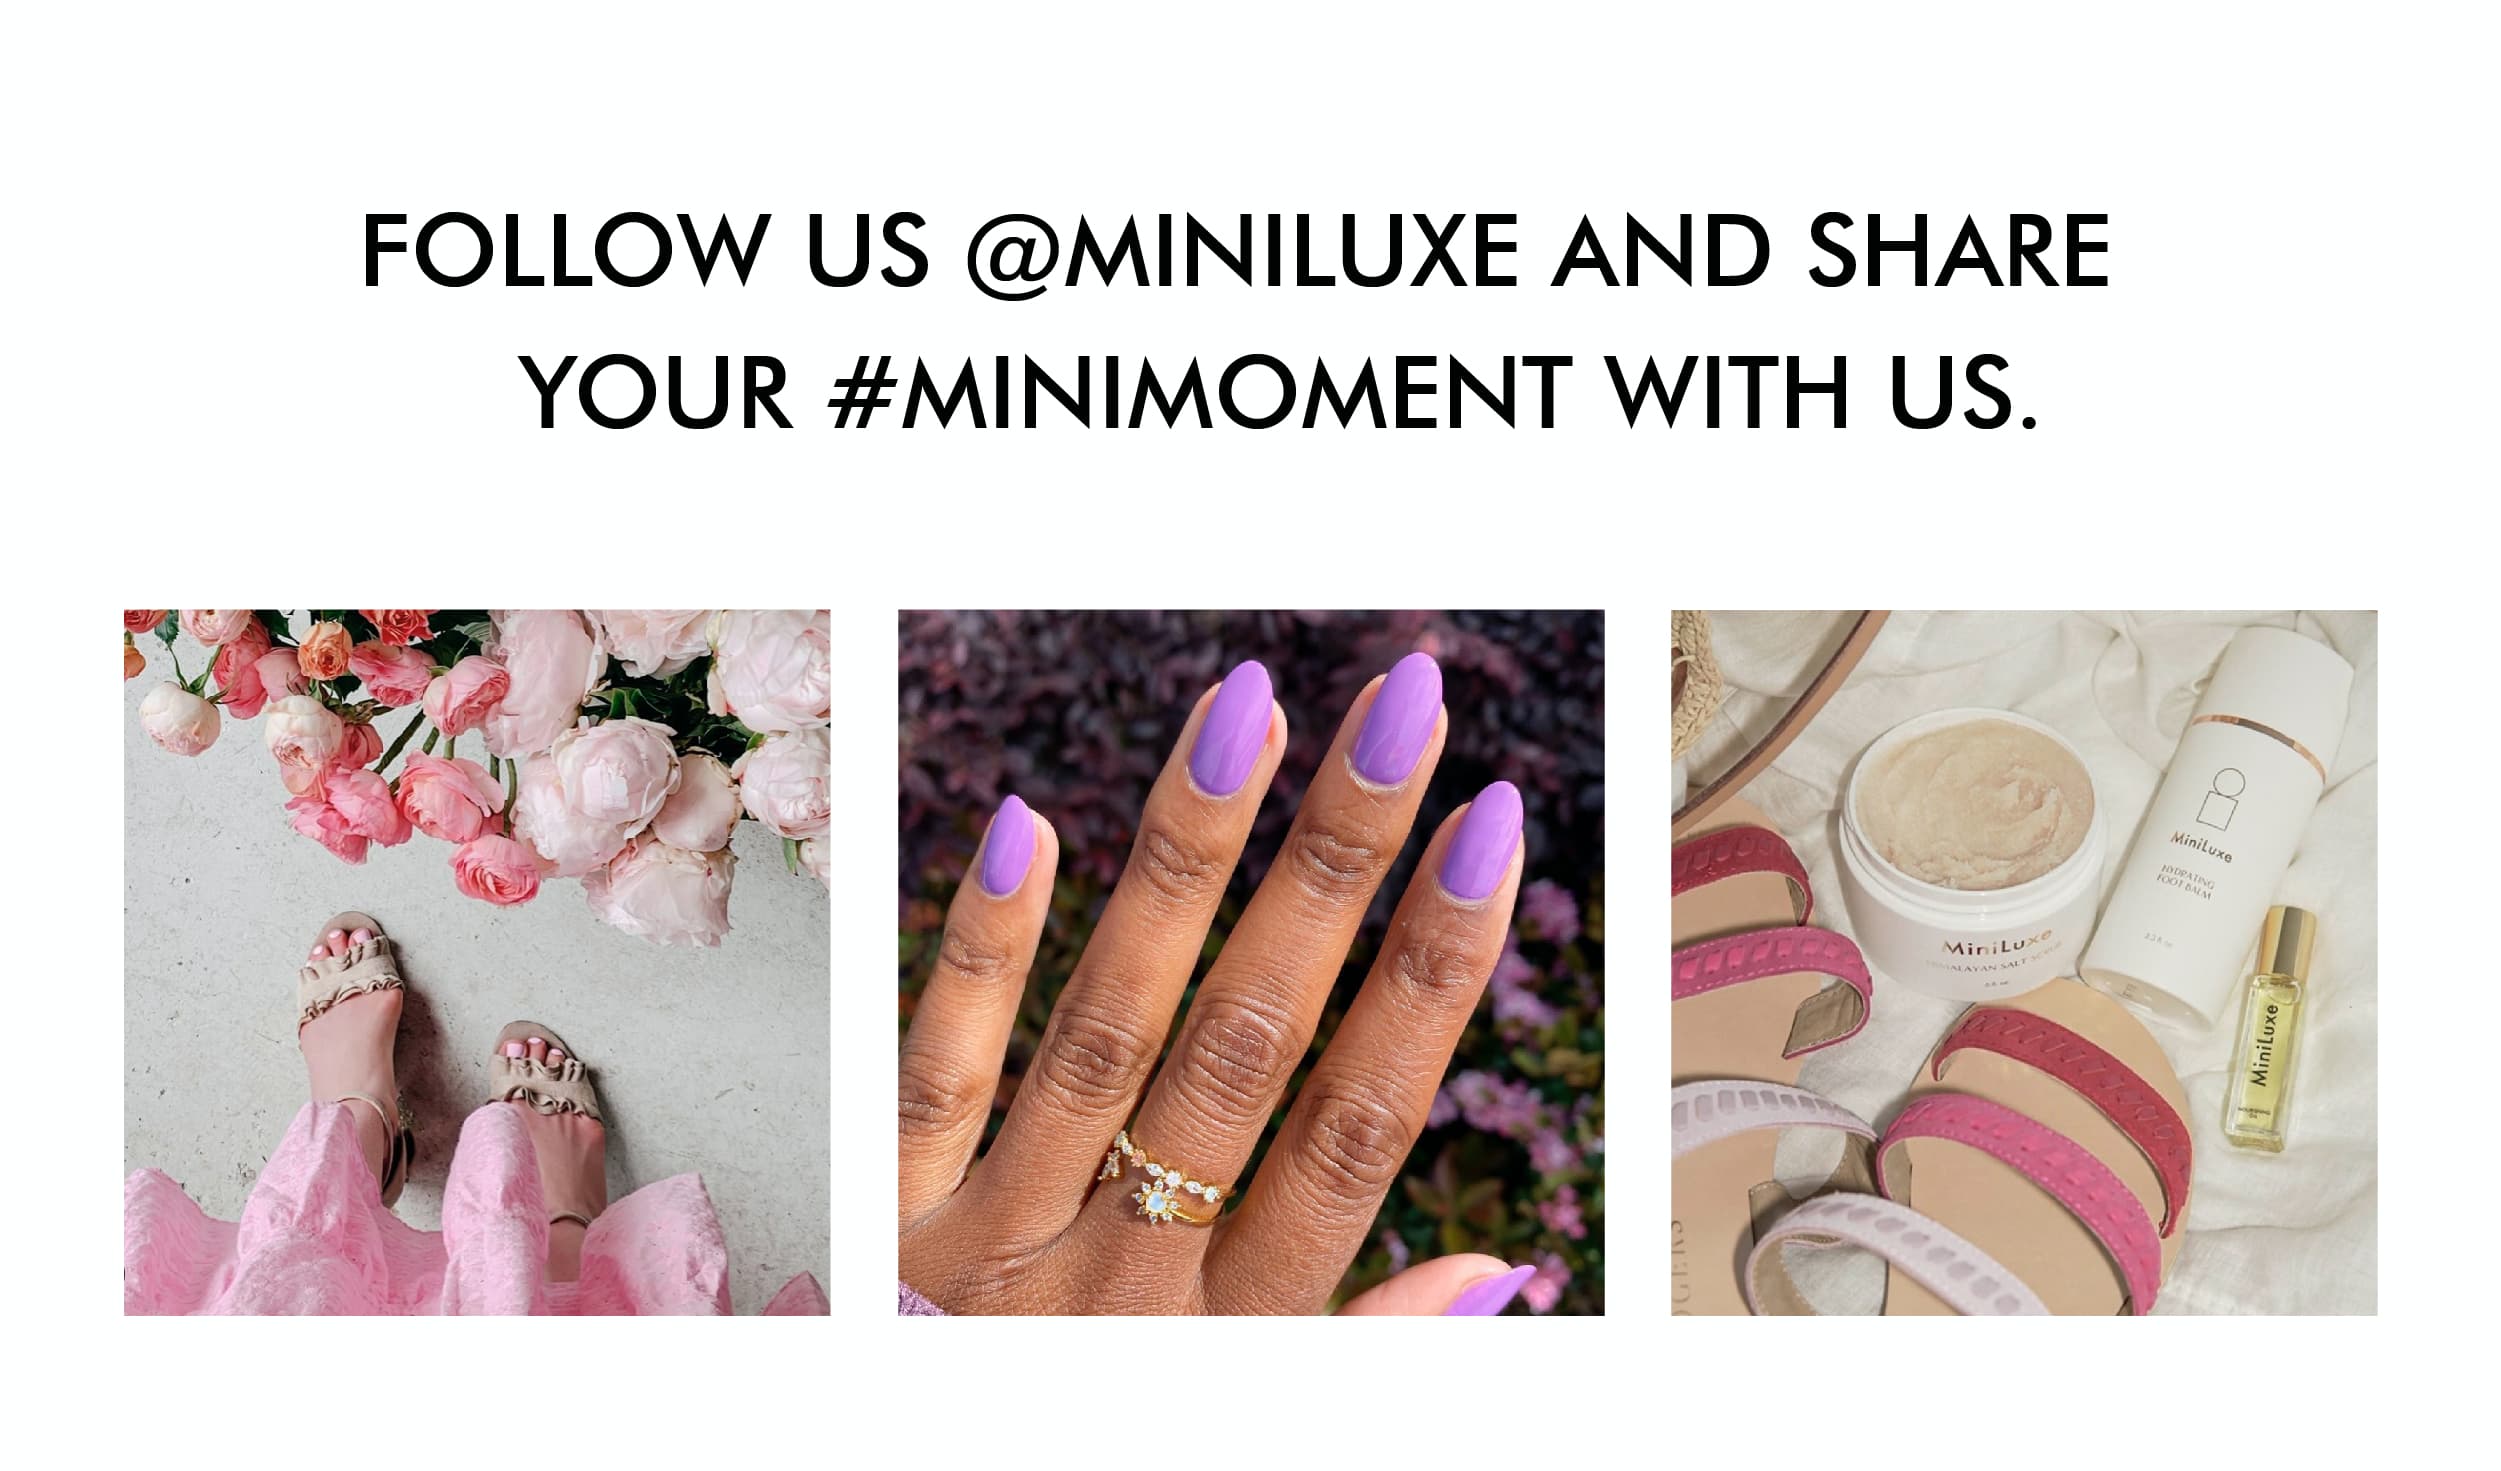 Follow us @miniluxe on Instagram